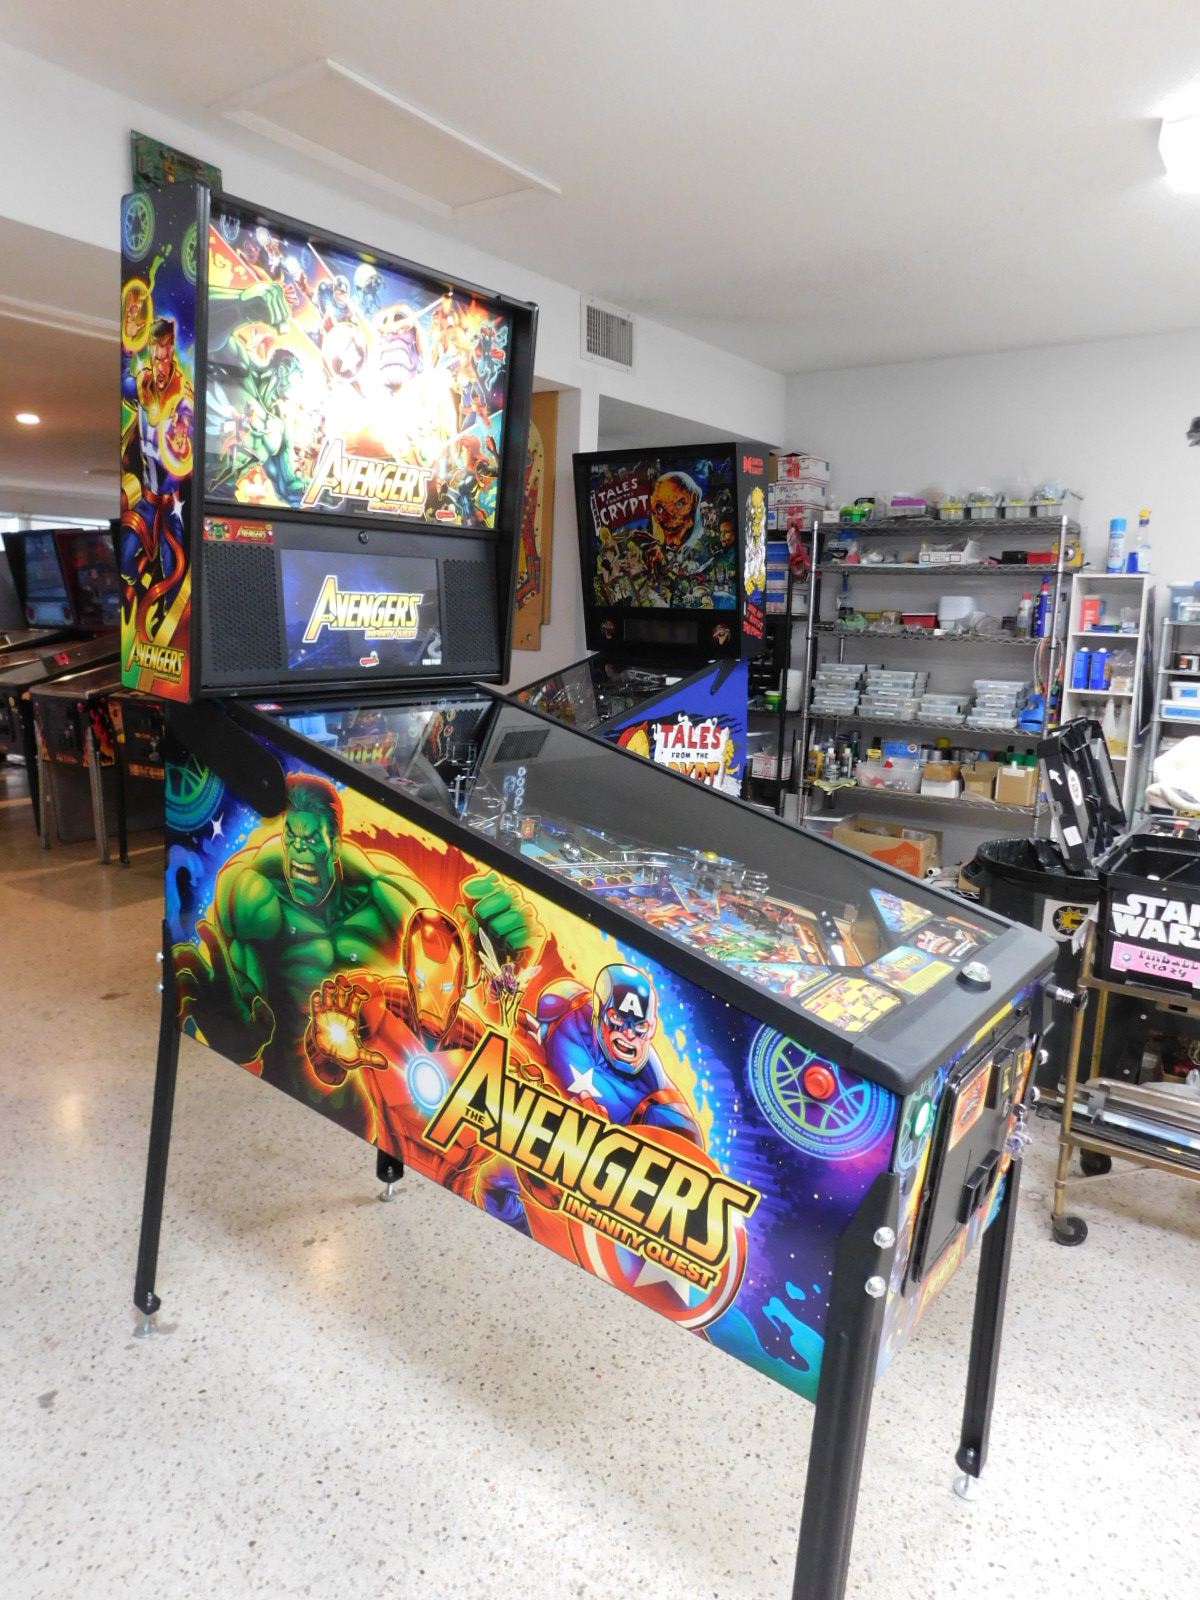 Pinball Restorations, Stern Avengers Infinity Quest Pro